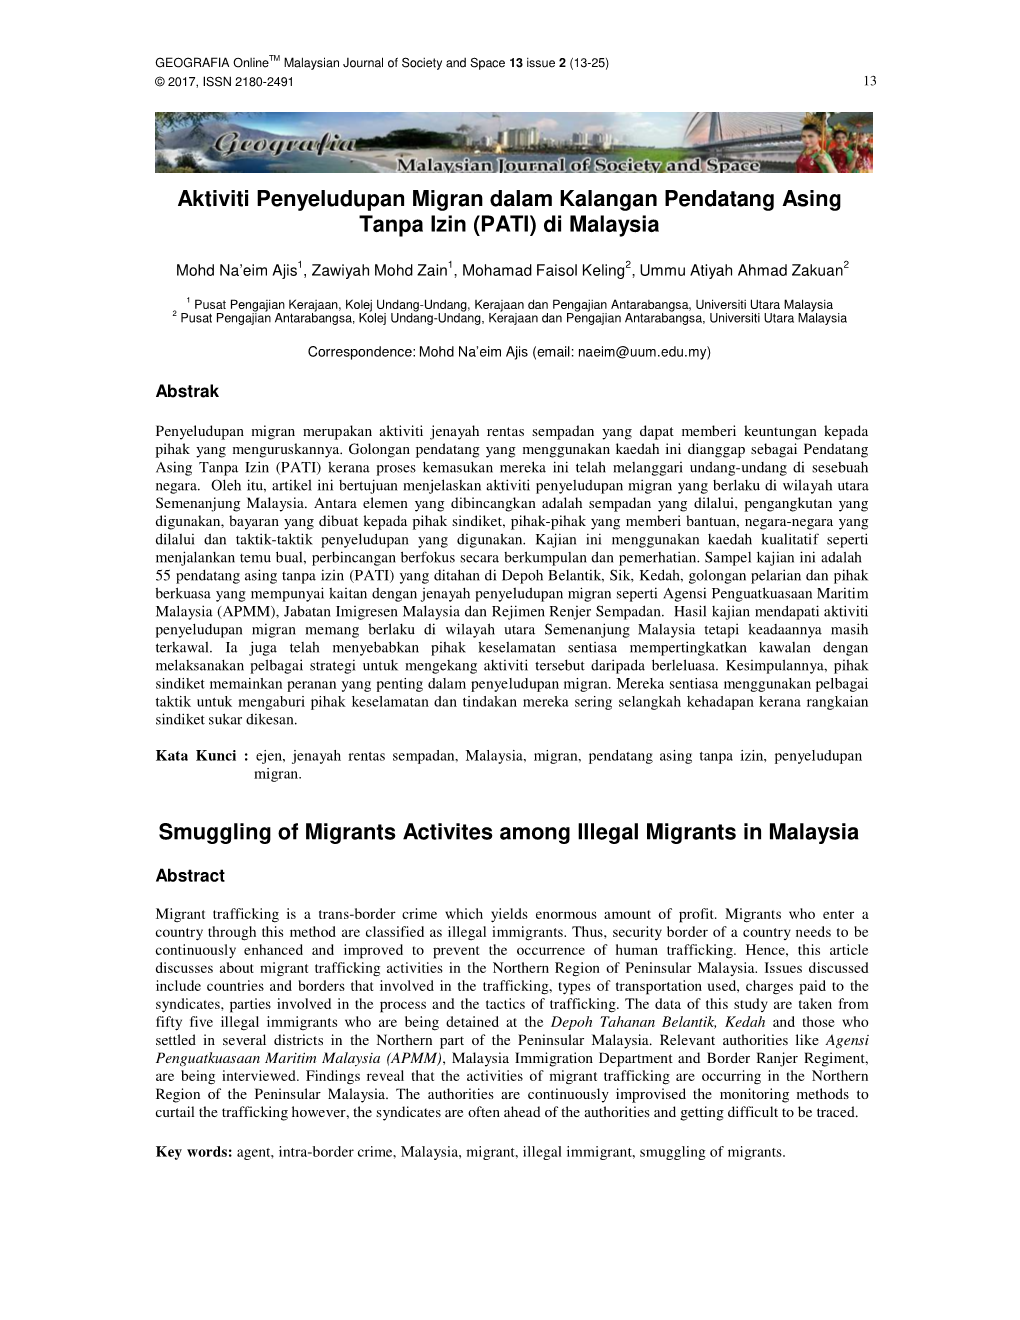 Aktiviti Penyeludupan Migran Dalam Kalangan Pendatang Asing Tanpa Izin (PATI) Di Malaysia Smuggling of Migrants Activites Among